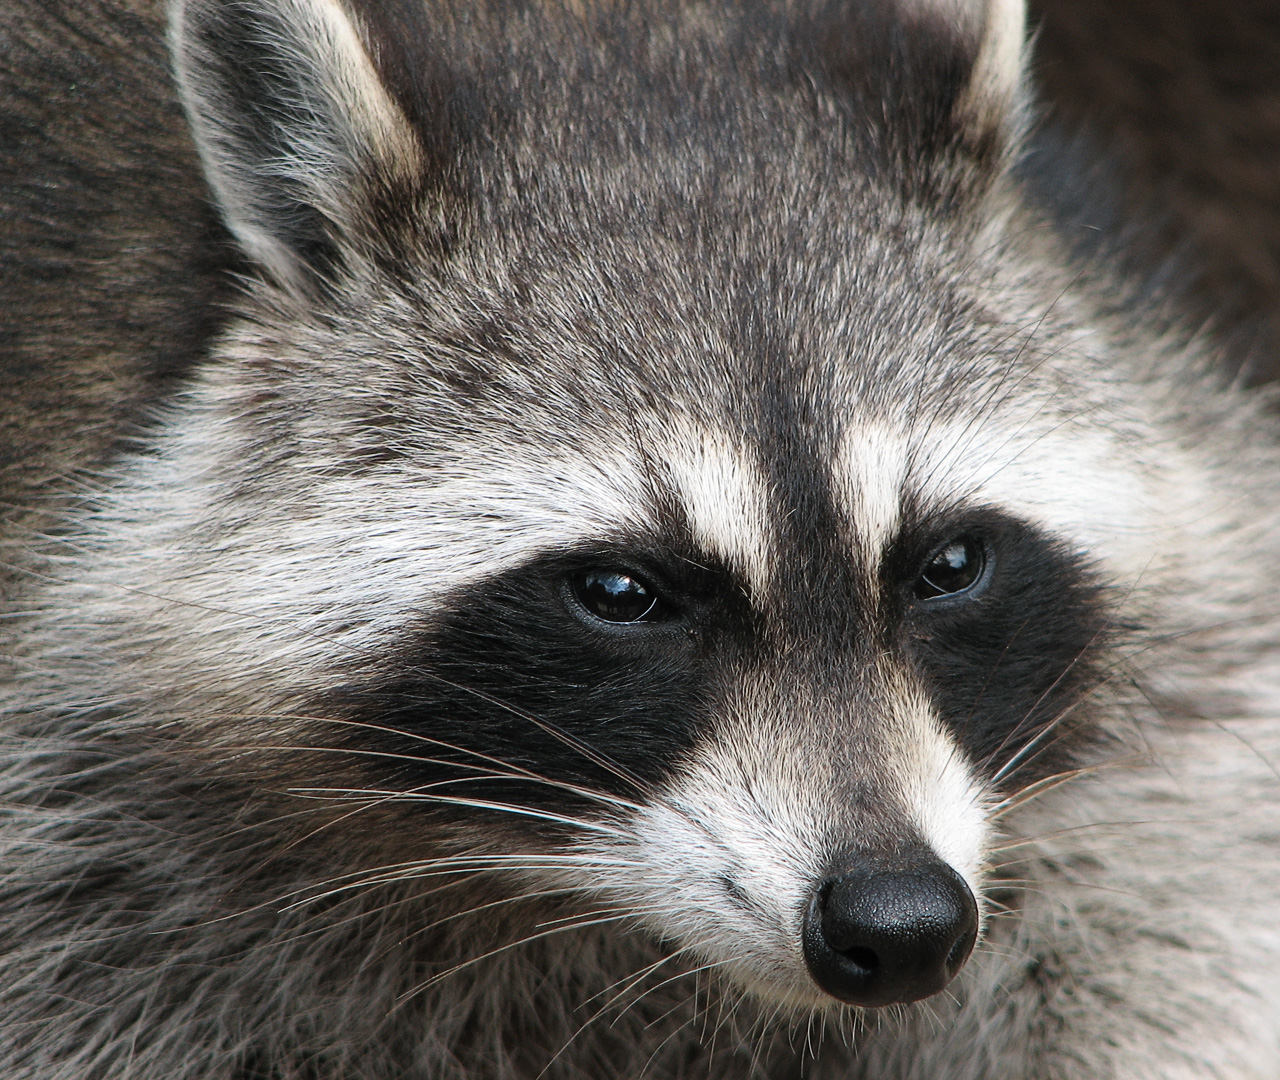 Going rabid over Metro Supermarket’s raccoon ban